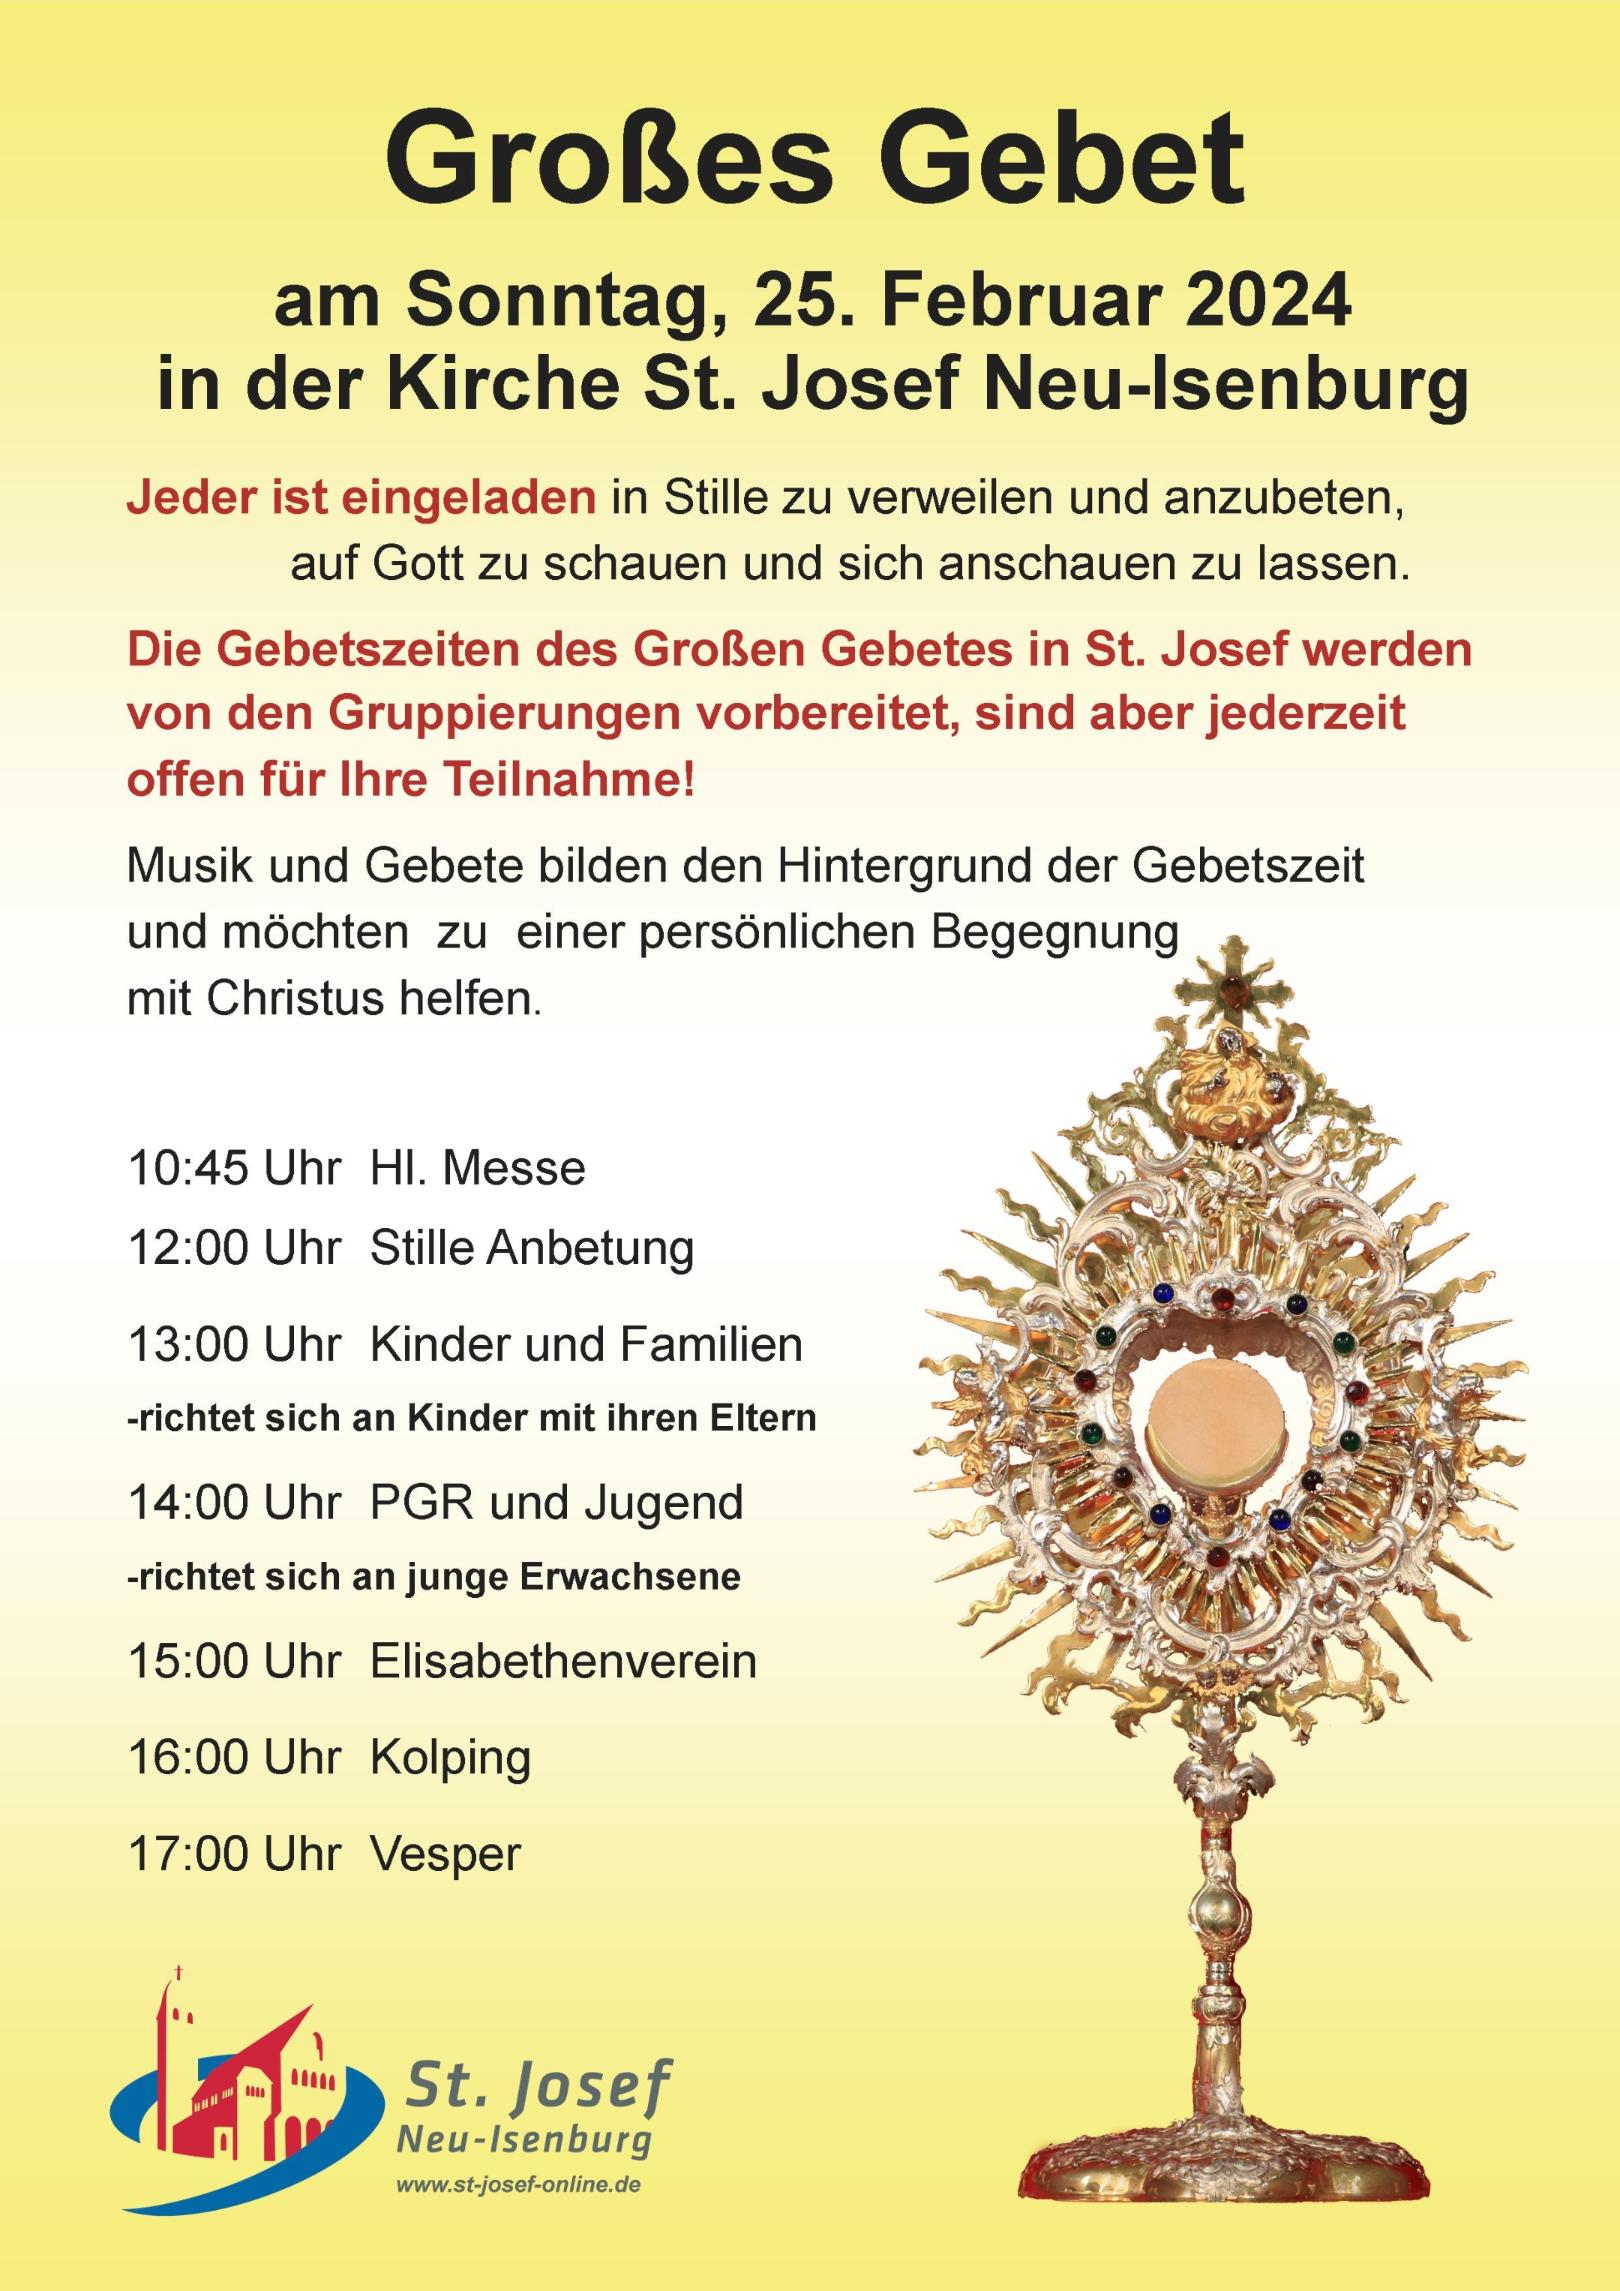 Großes Gebet 2024 in St. Josef (c) D. Thiel